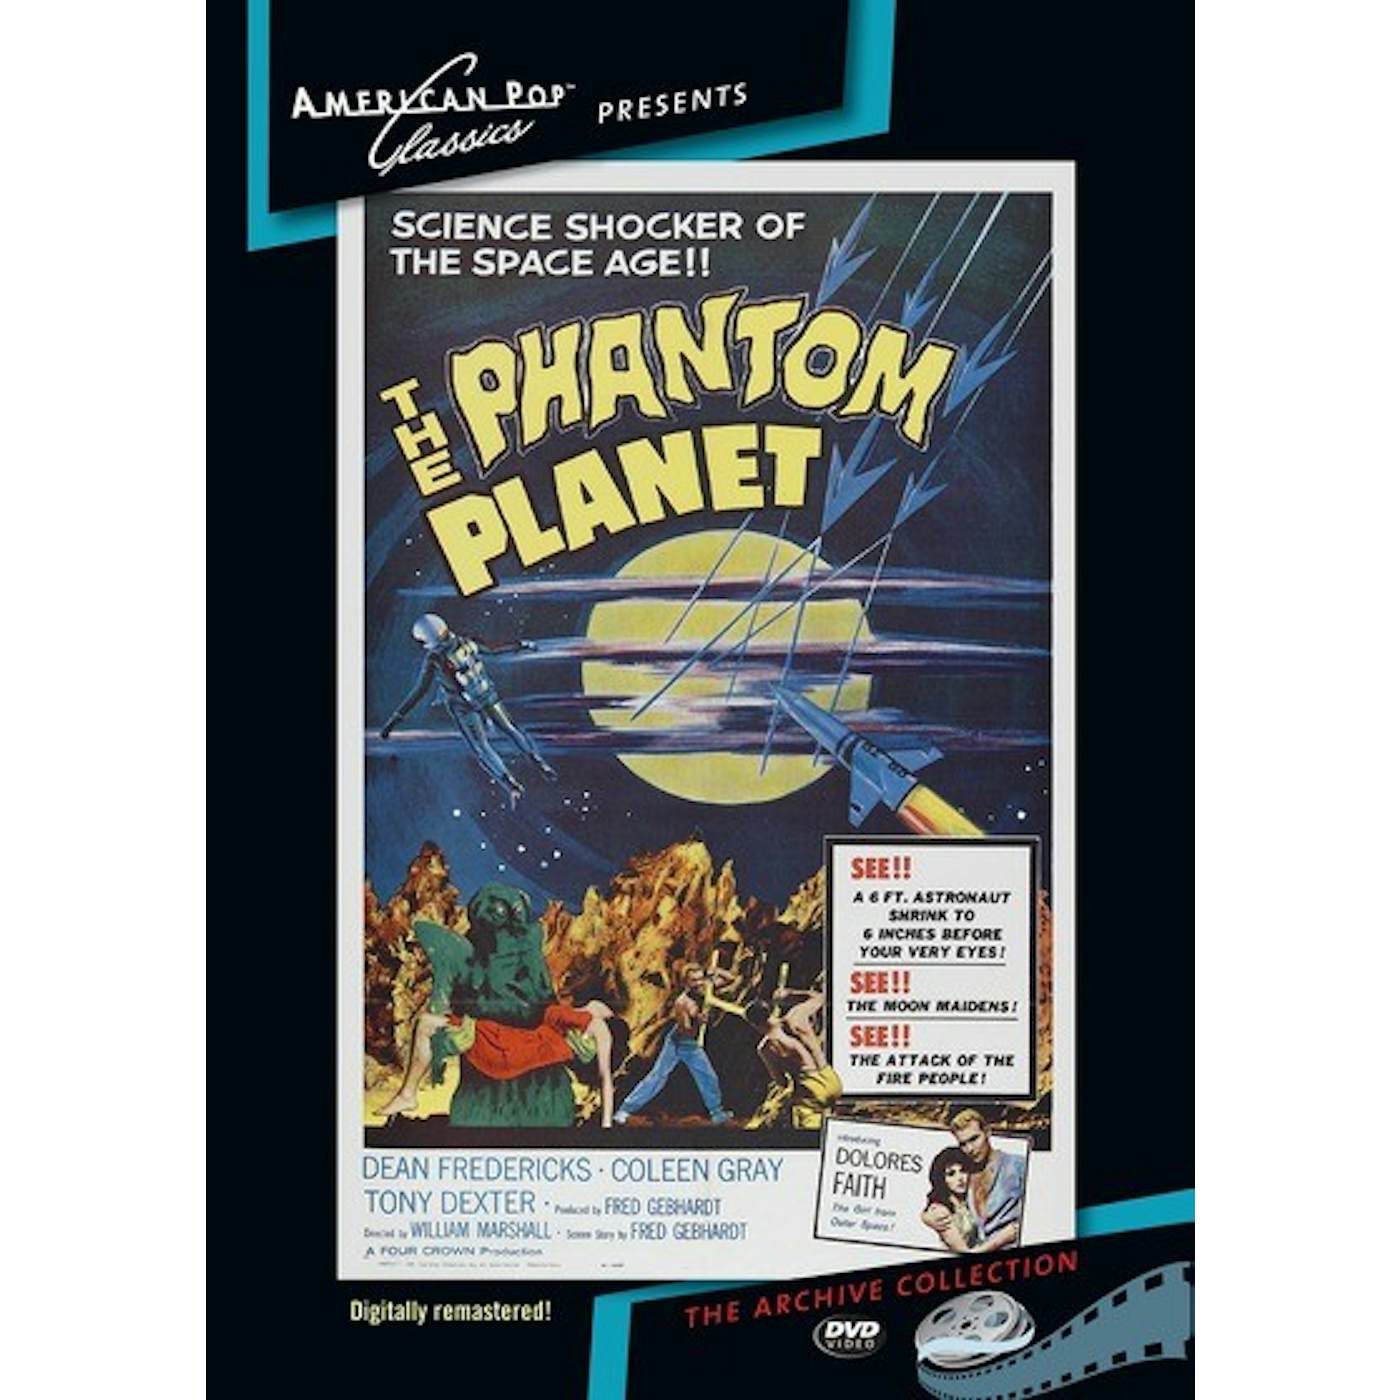 PHANTOM PLANET DVD